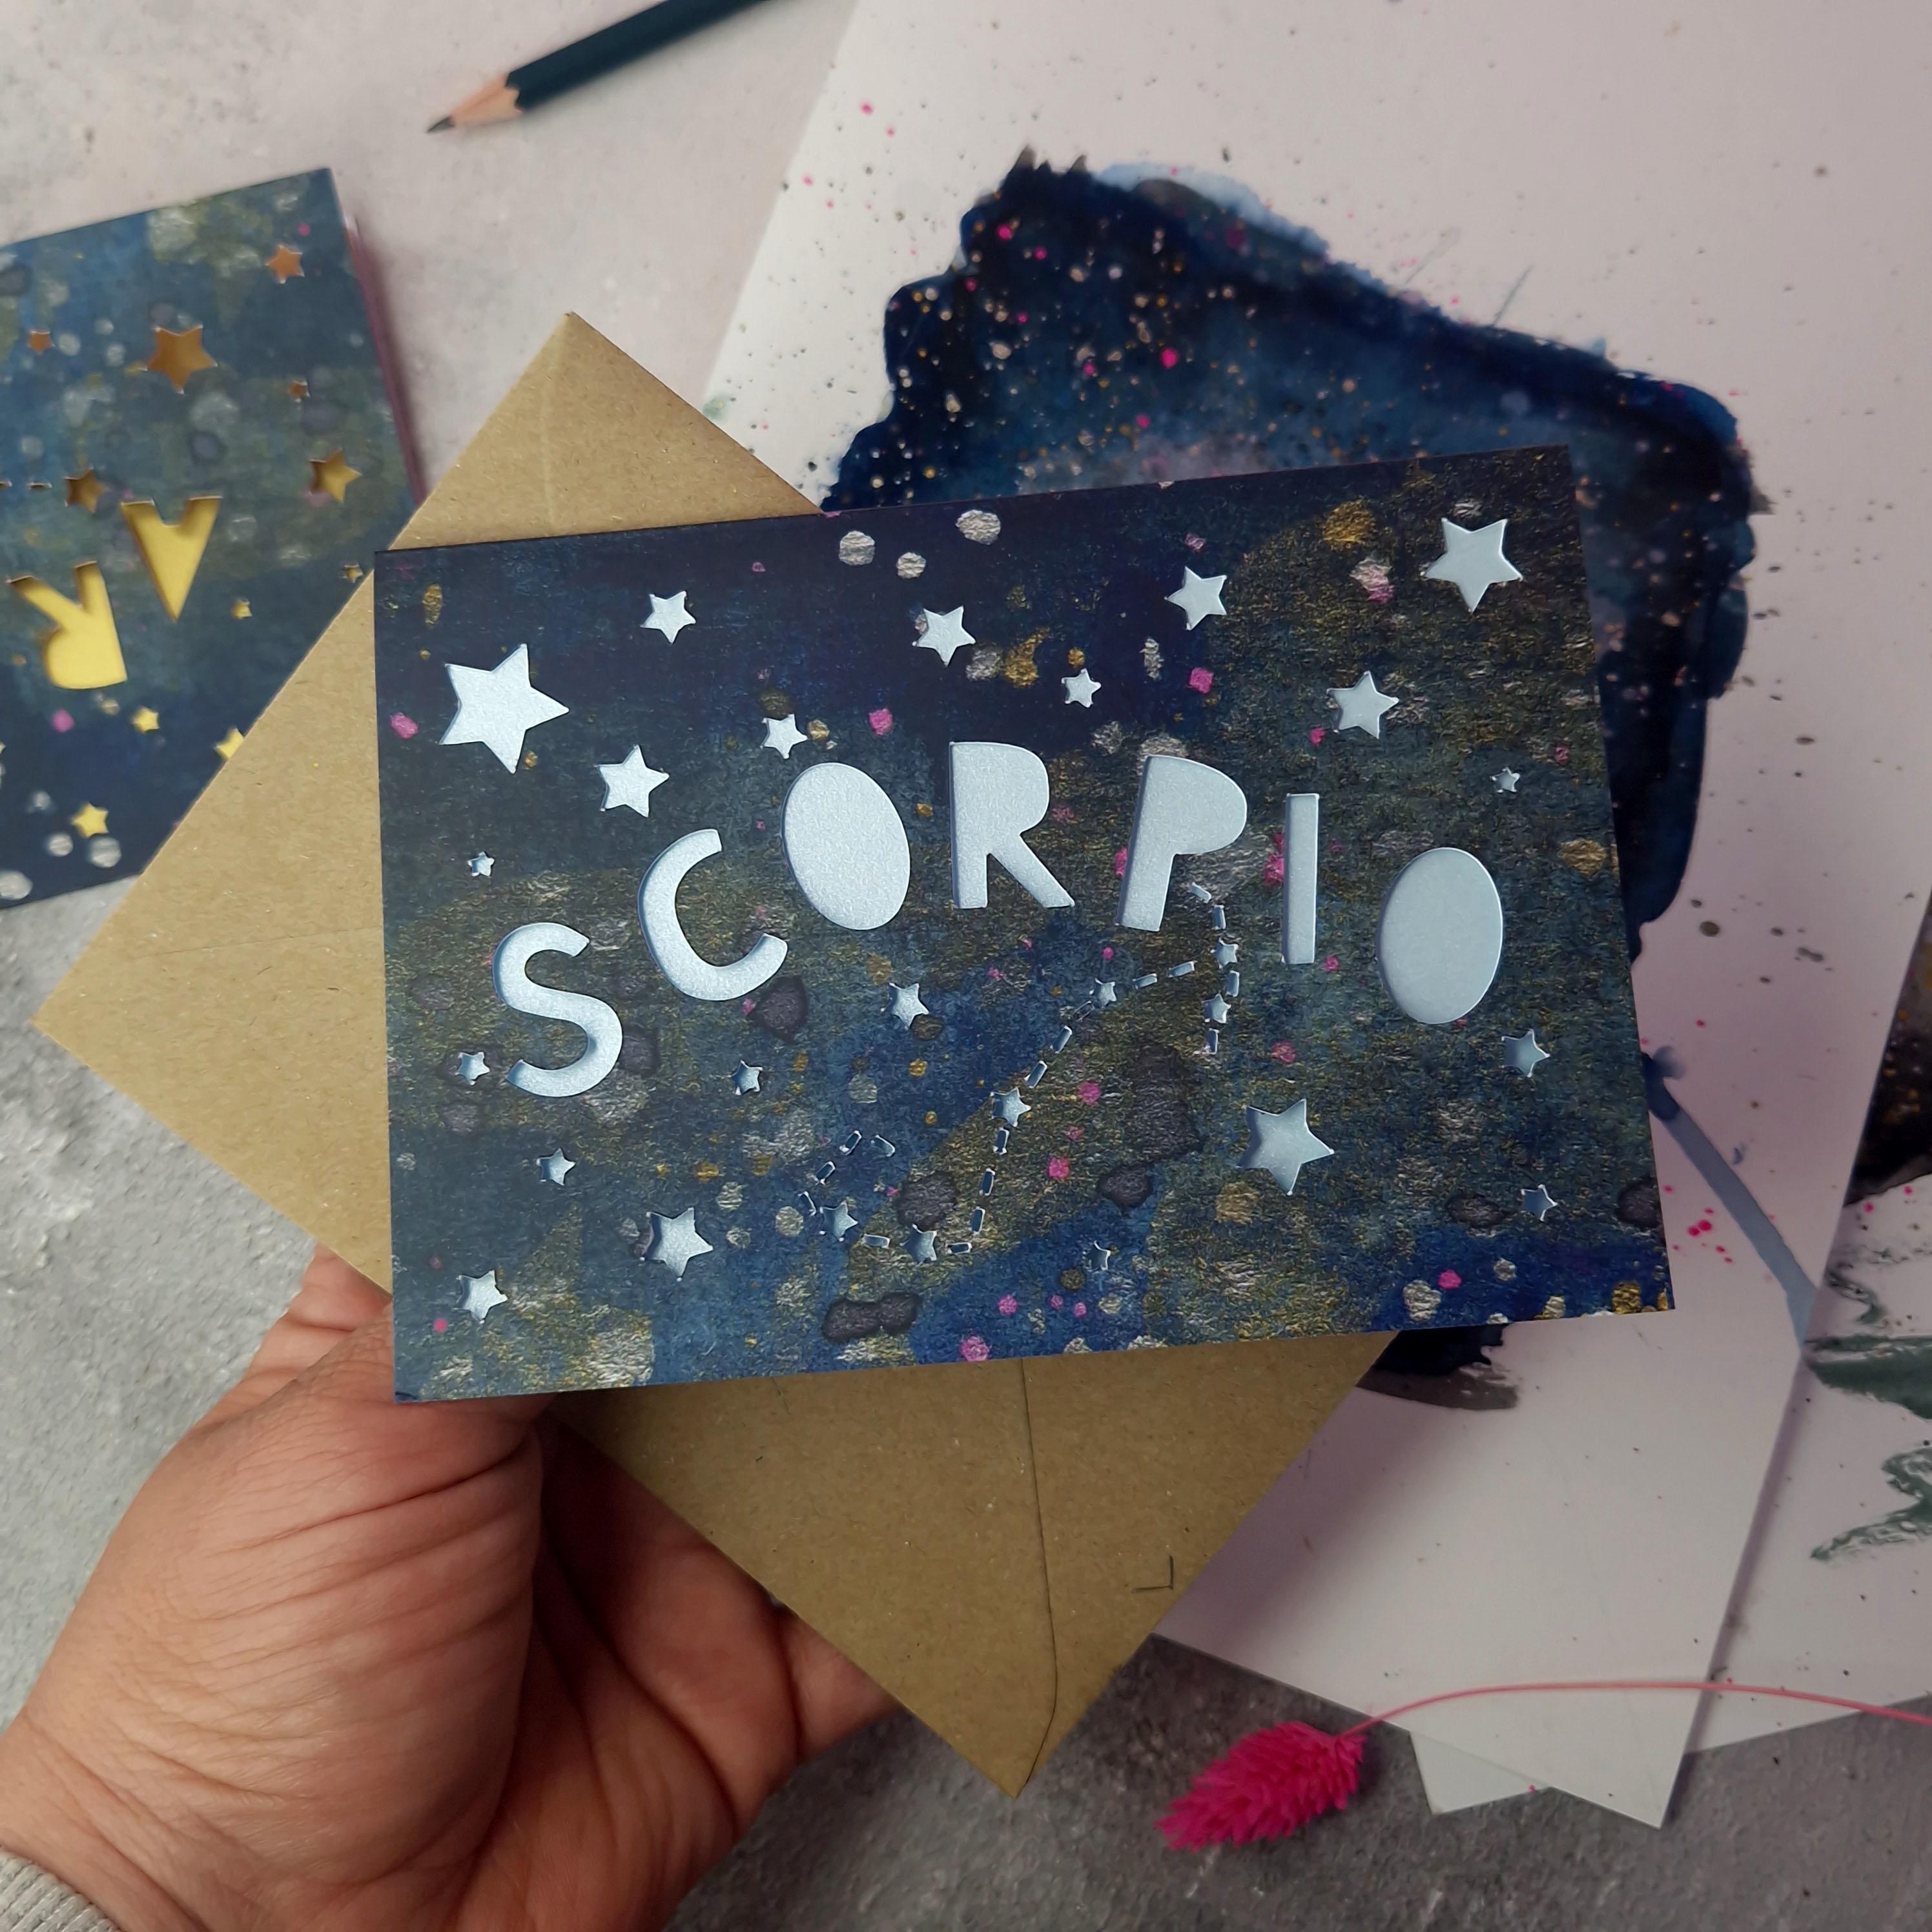 A6 card with a Scorpio theme